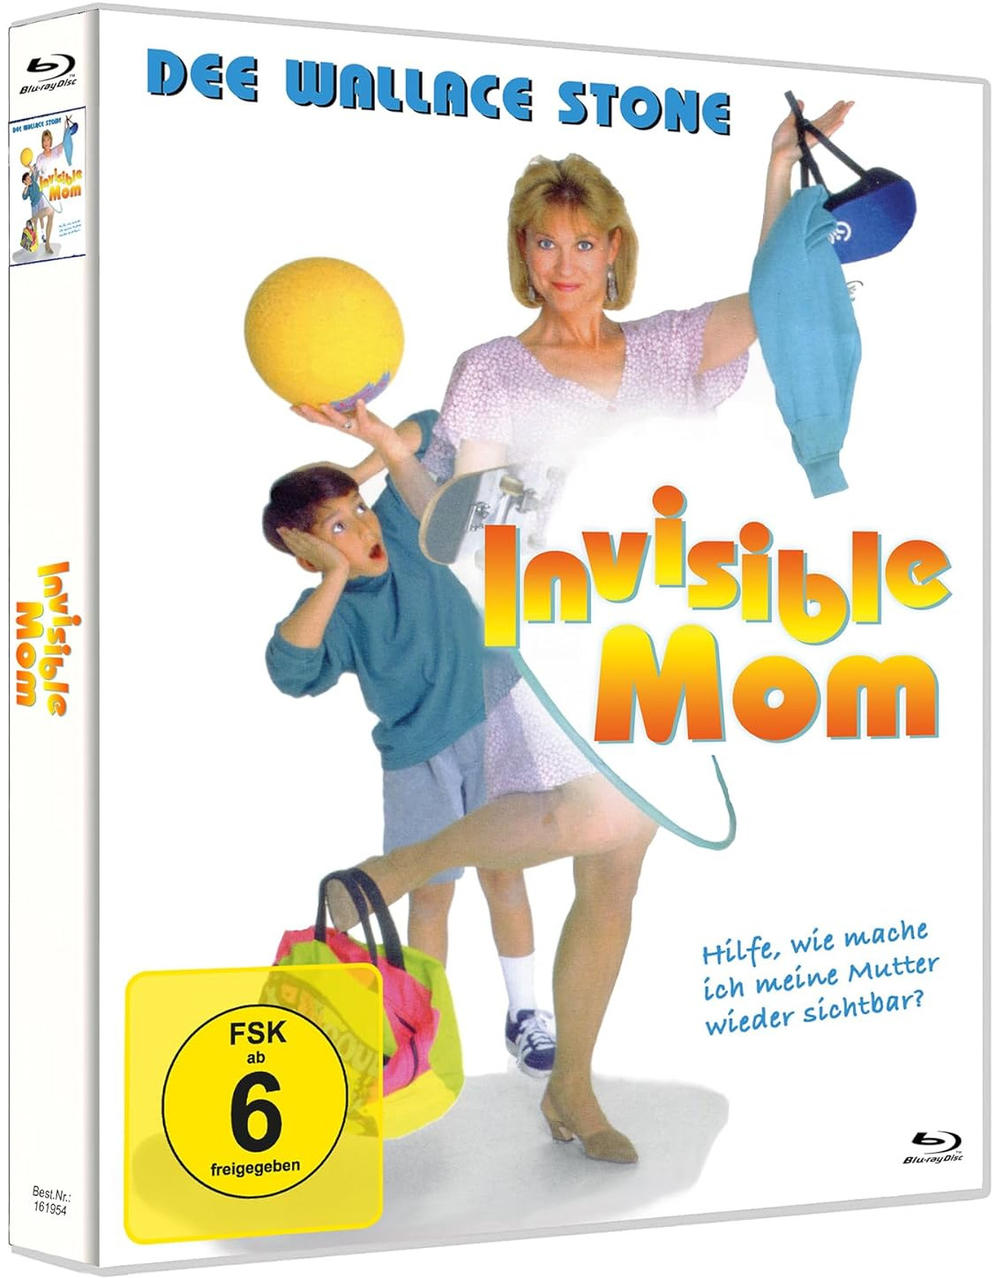 Invisible Mom - Hilfe, Mutter Unsichtbar meine Blu-ray ist